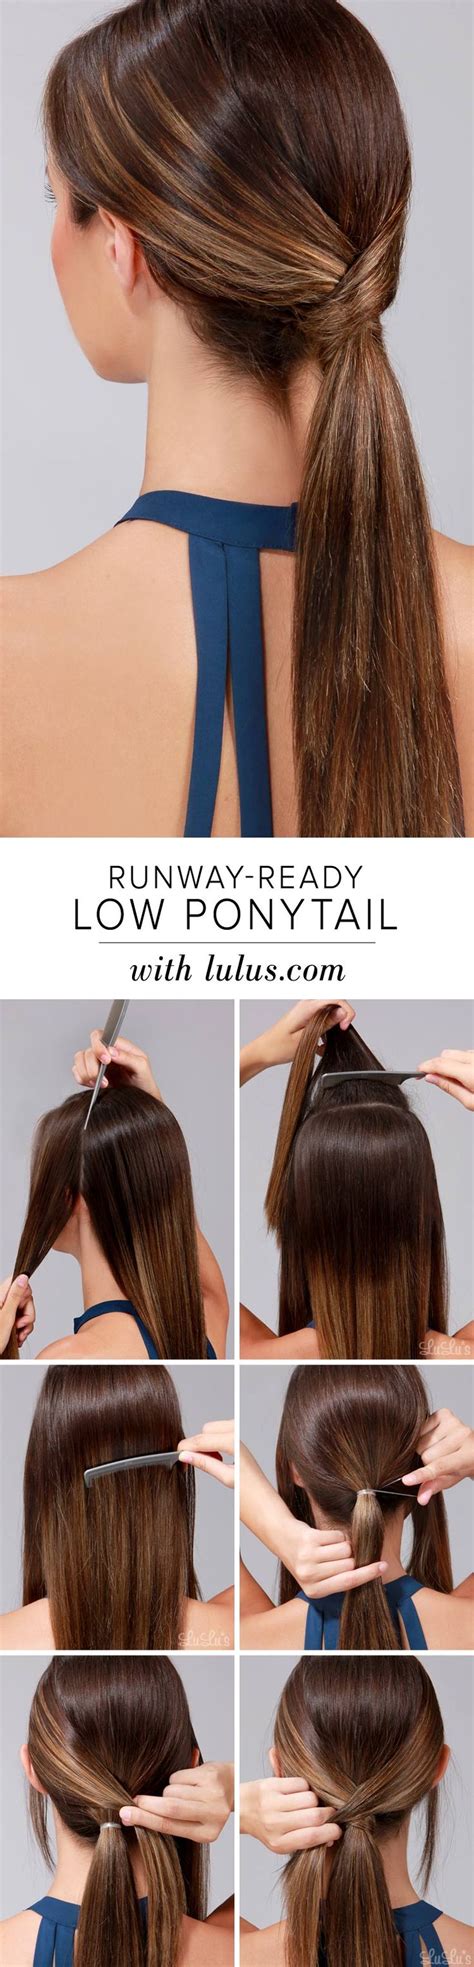 20 Amazing Ponytail Hair Tutorials For Beginners Pretty Designs